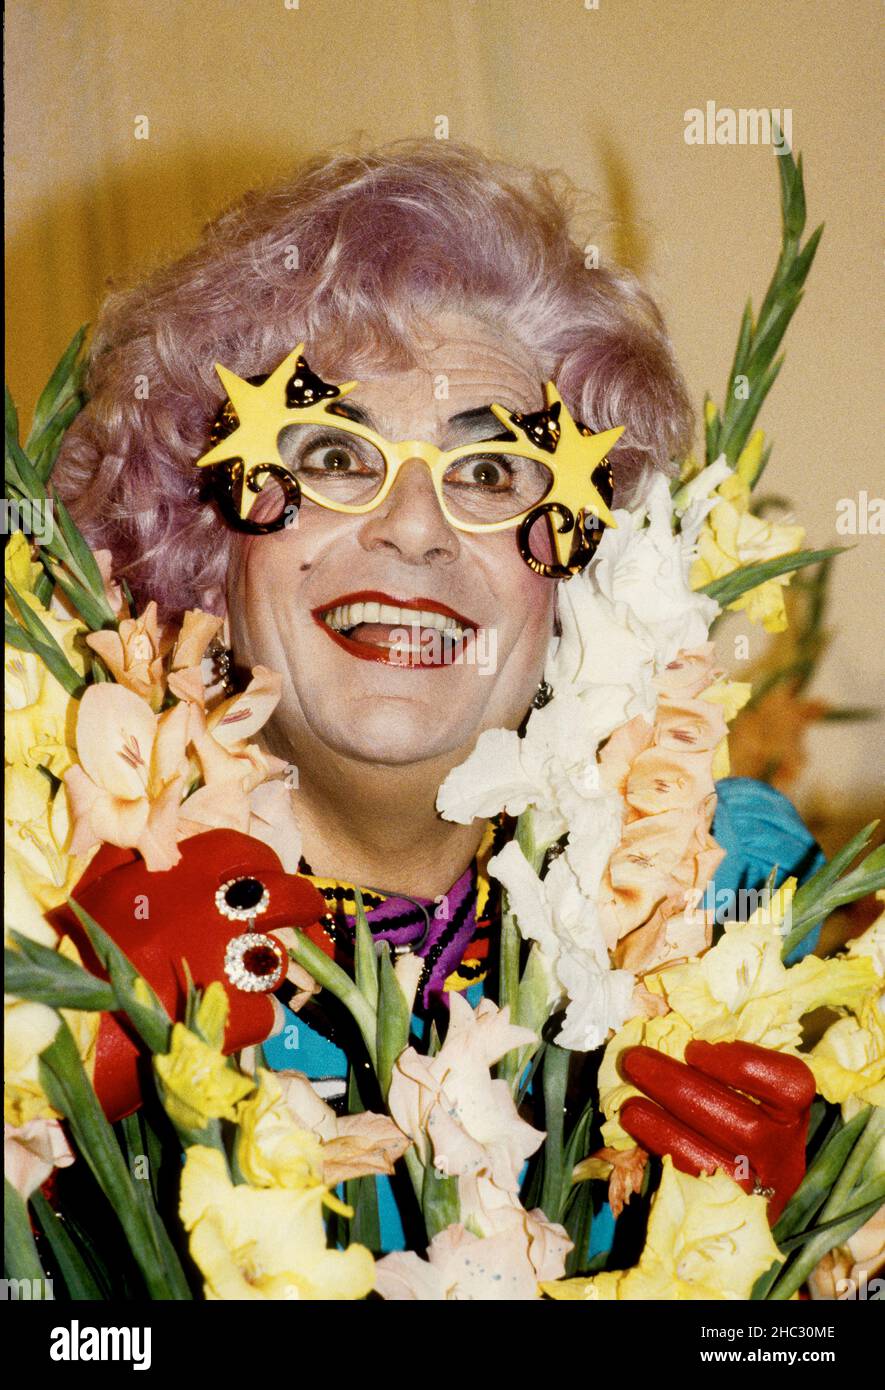 Australian comedy actor Barry Humphreys as Dame Edna Everage Stock Photo